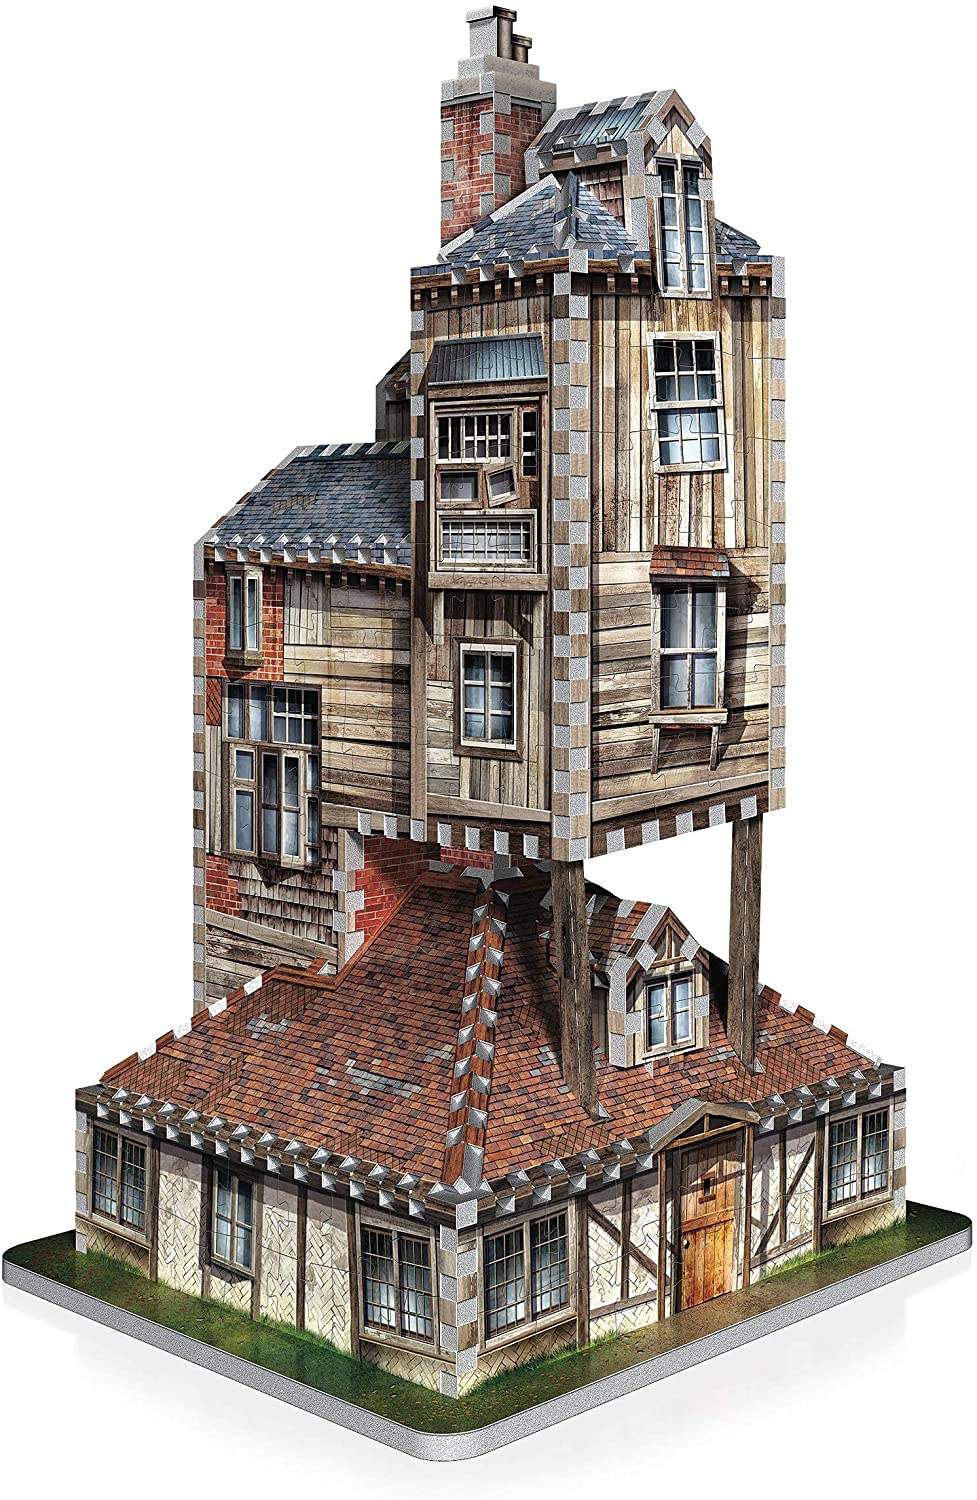 Wrebbit 3D Puzzle W3D-1011 Harry Potter The Burrow-The Weasley's Family Home Puzzle (415-Piece), Multicolour